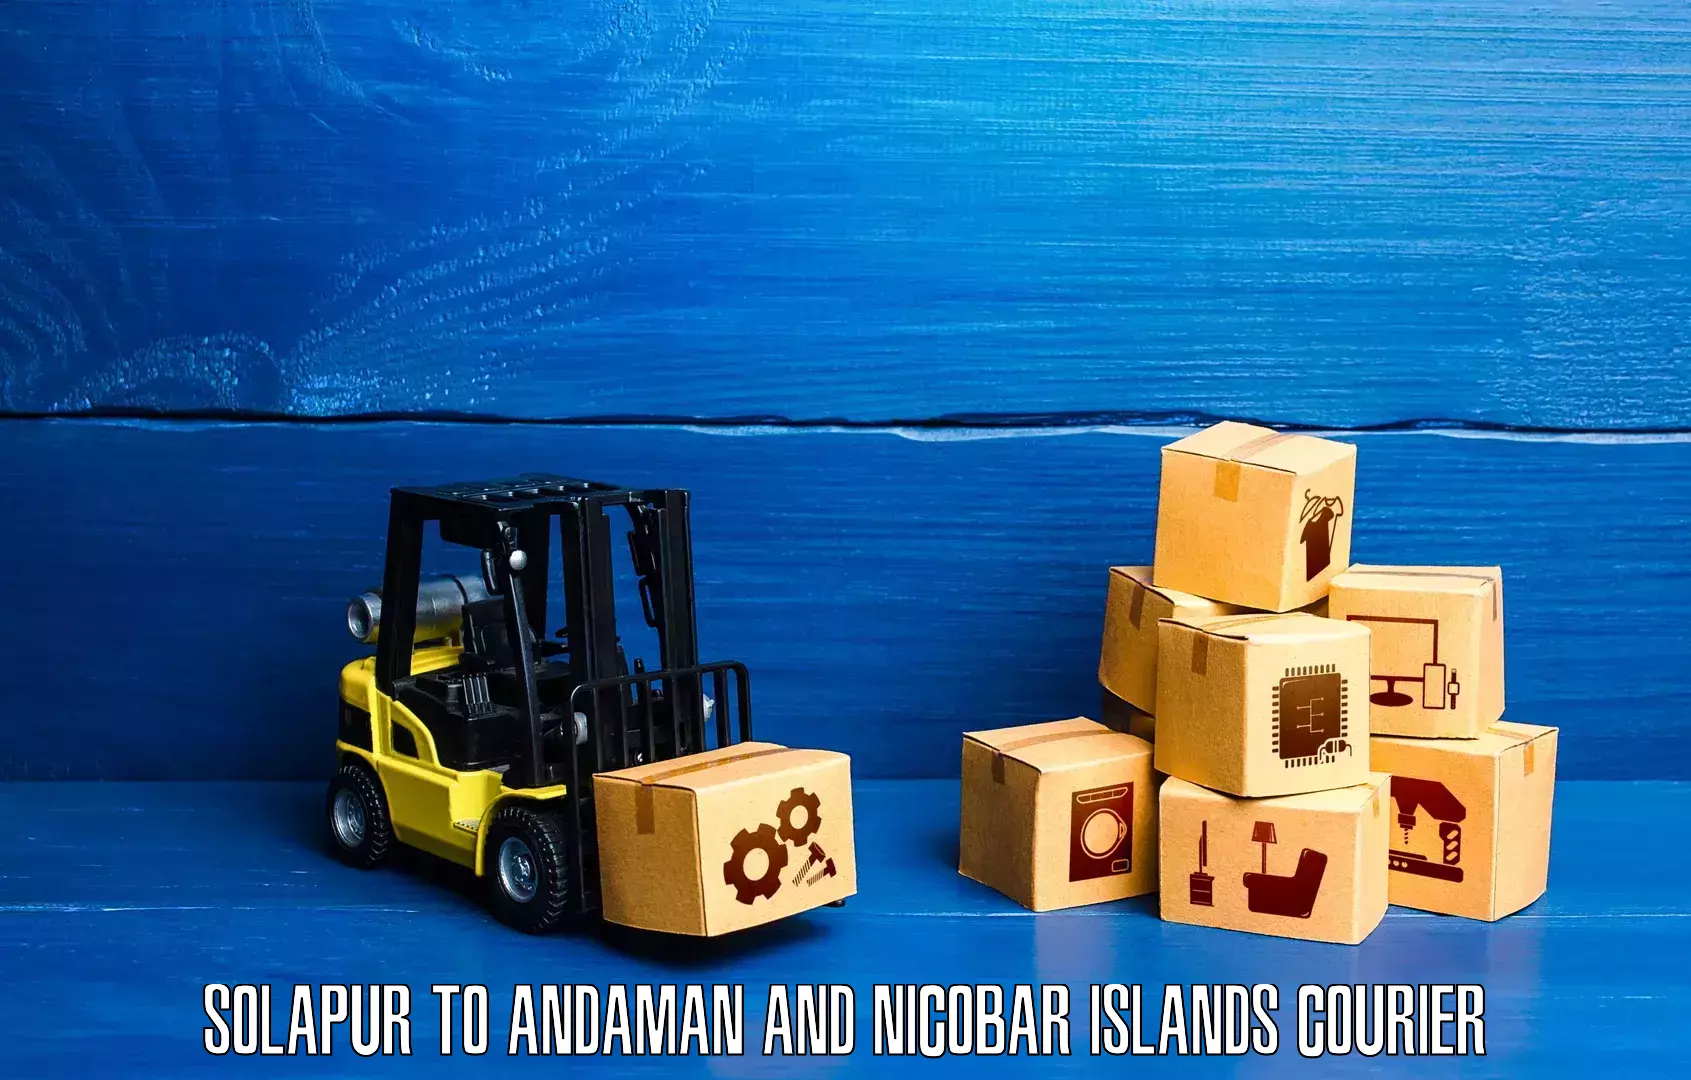 Global logistics network Solapur to Andaman and Nicobar Islands